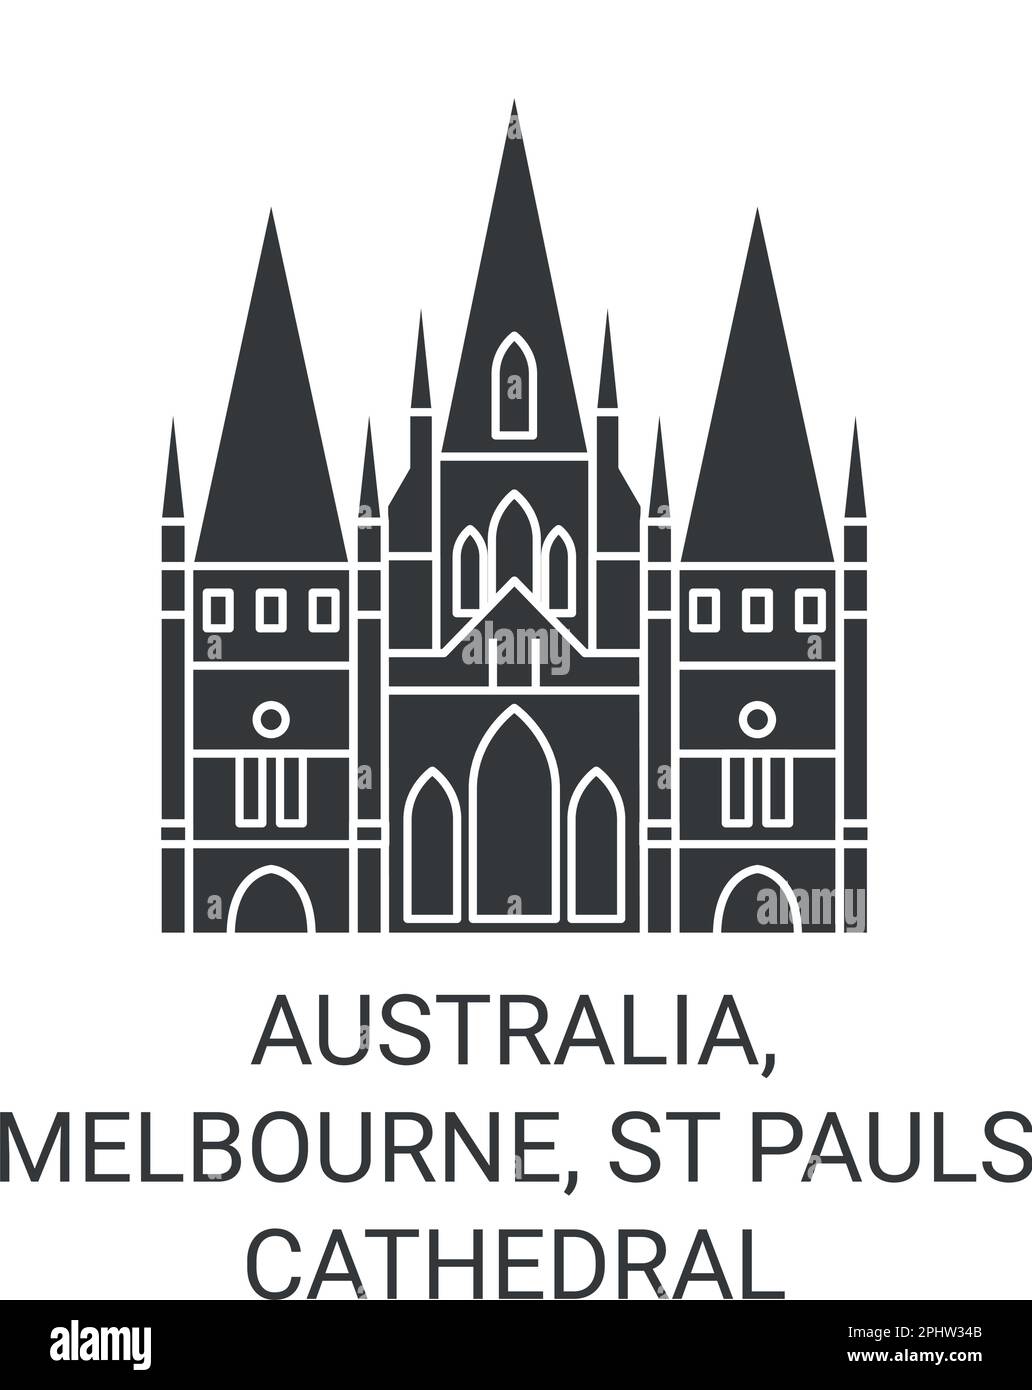 Australia, Melbourne, St Pauls Cathedral travel landmark vector illustration Stock Vector